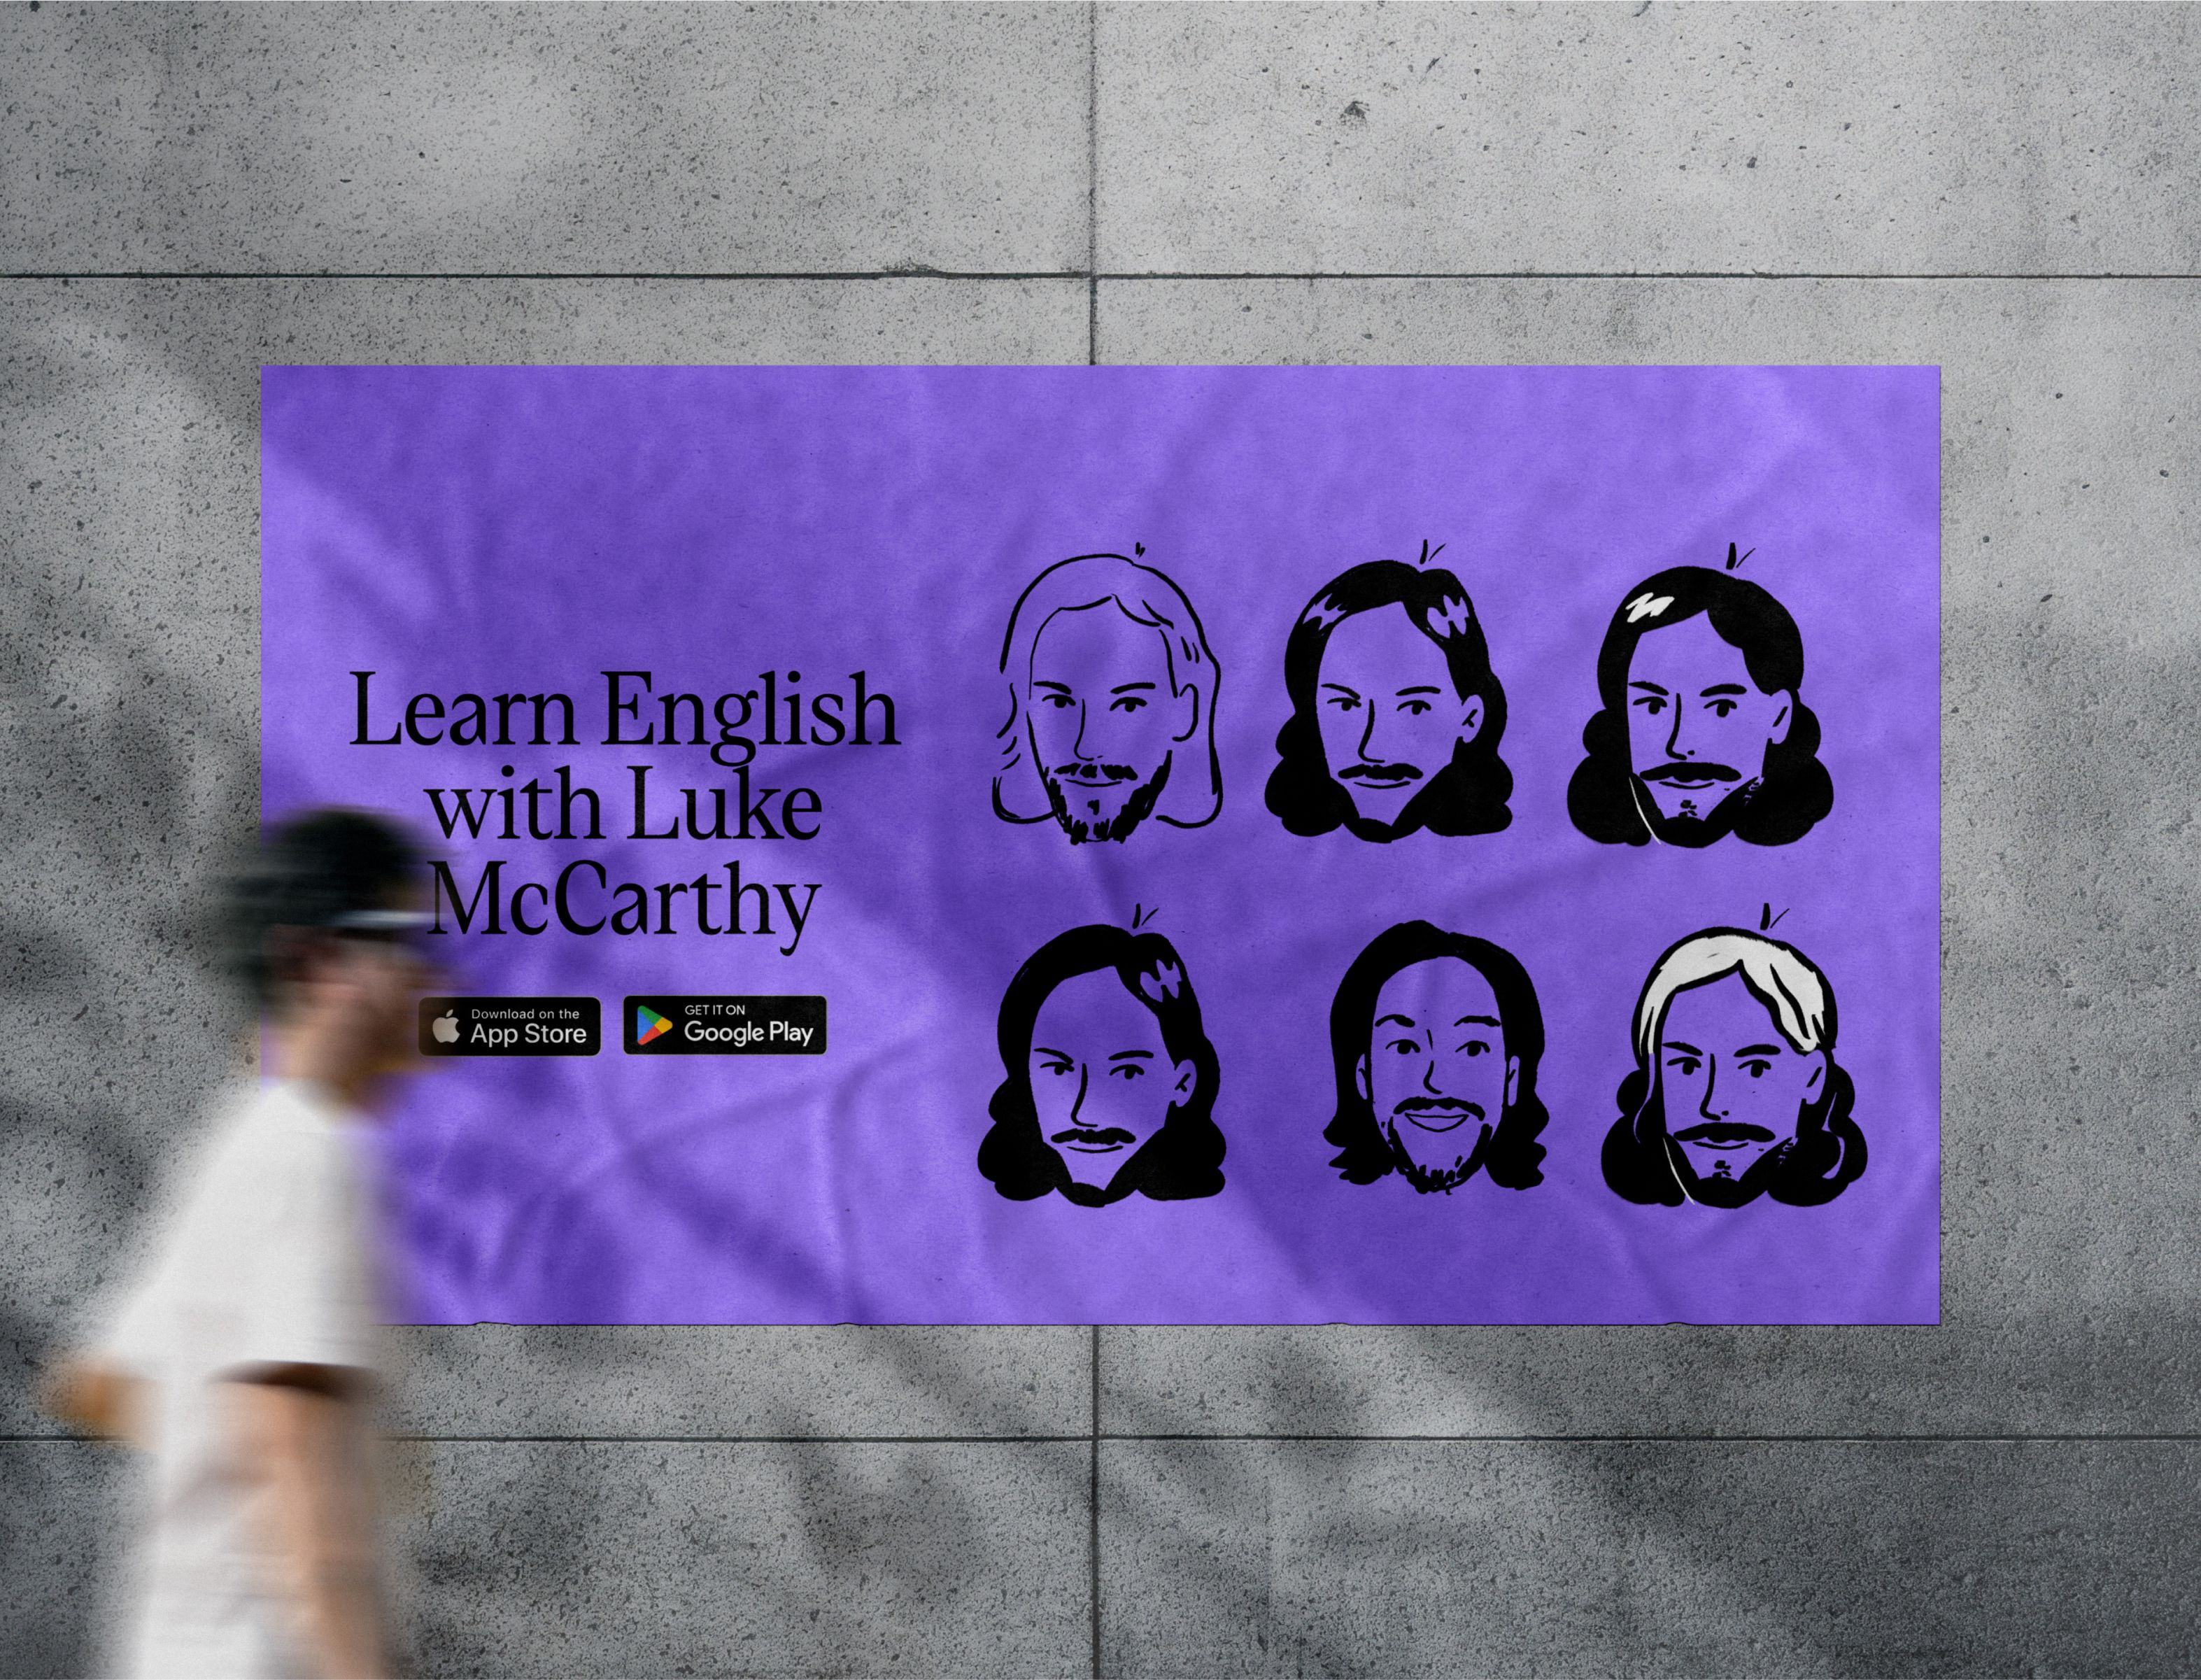 Luke & English App for learning English